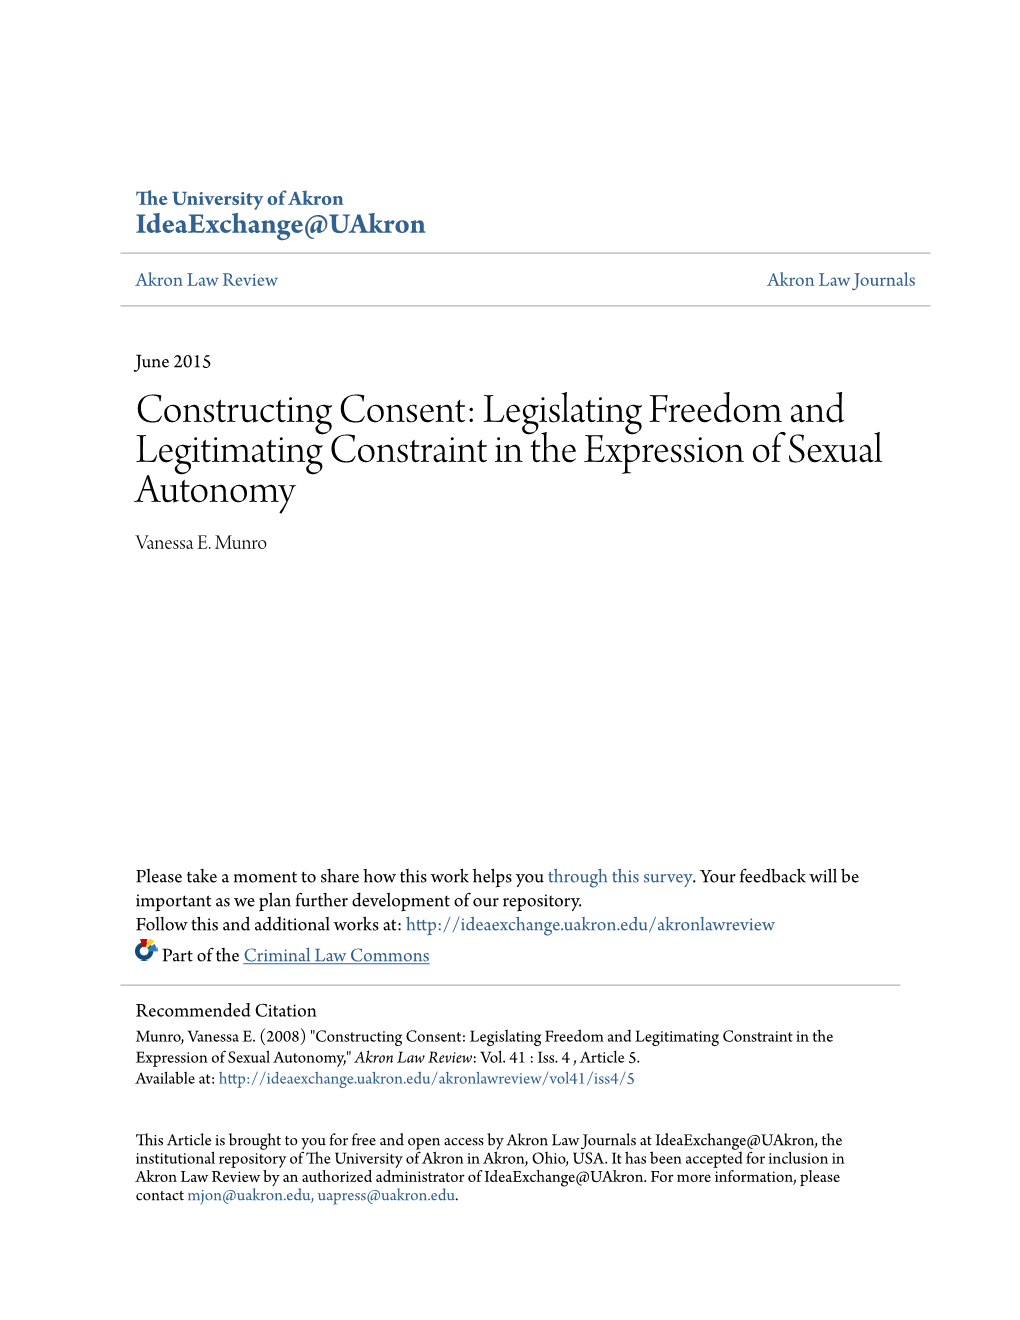 Constructing Consent: Legislating Freedom and Legitimating Constraint in the Expression of Sexual Autonomy Vanessa E